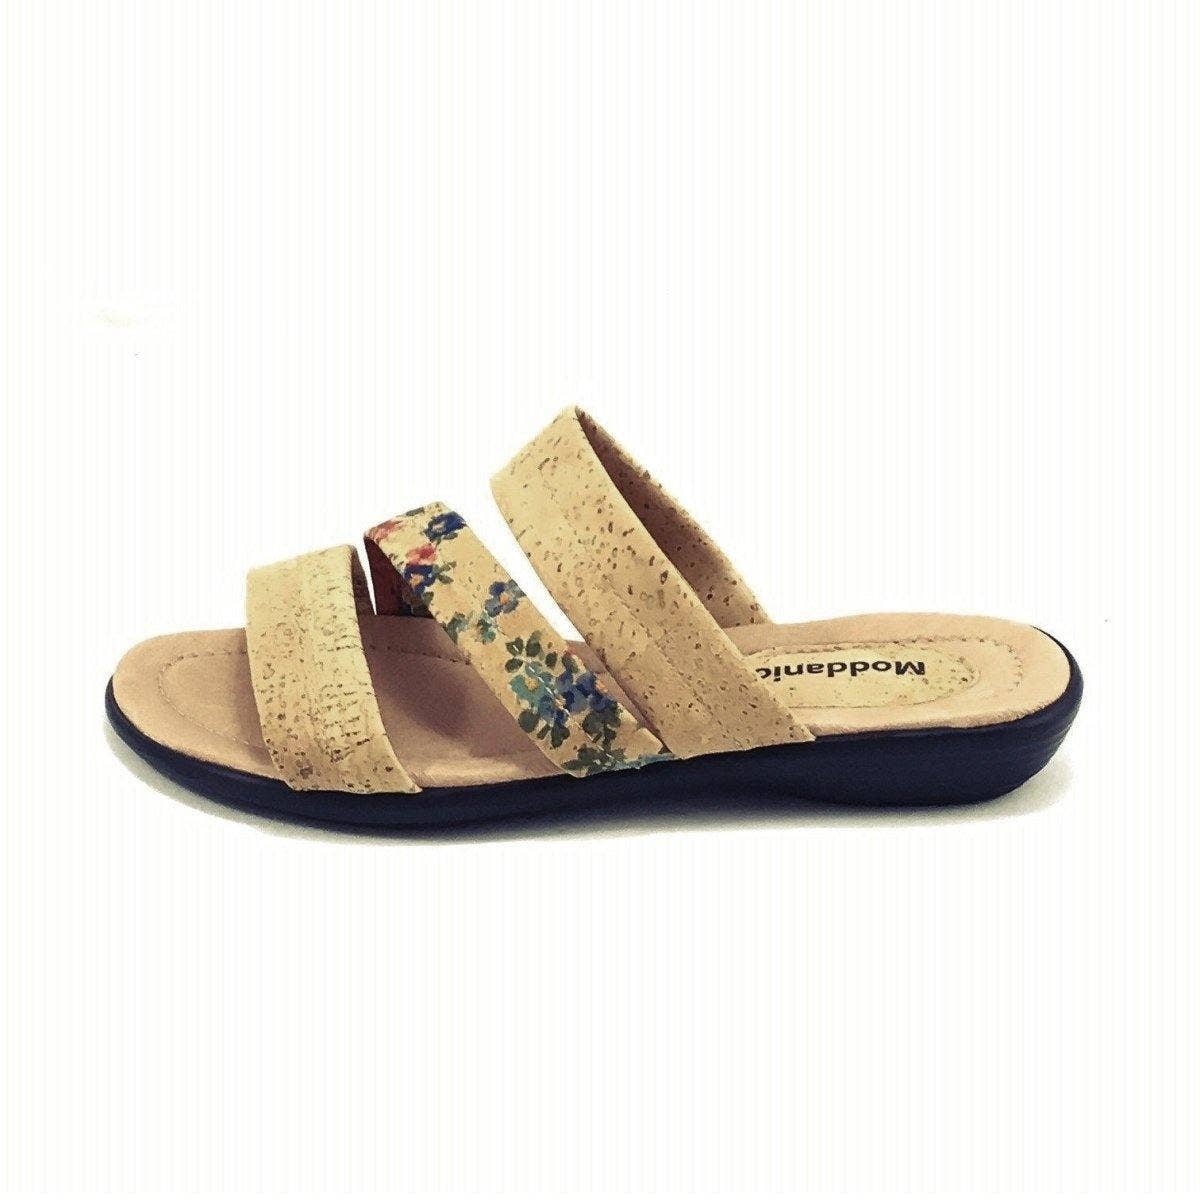 Cork Sandals and Vegan Summer Sandals for Women in Floral